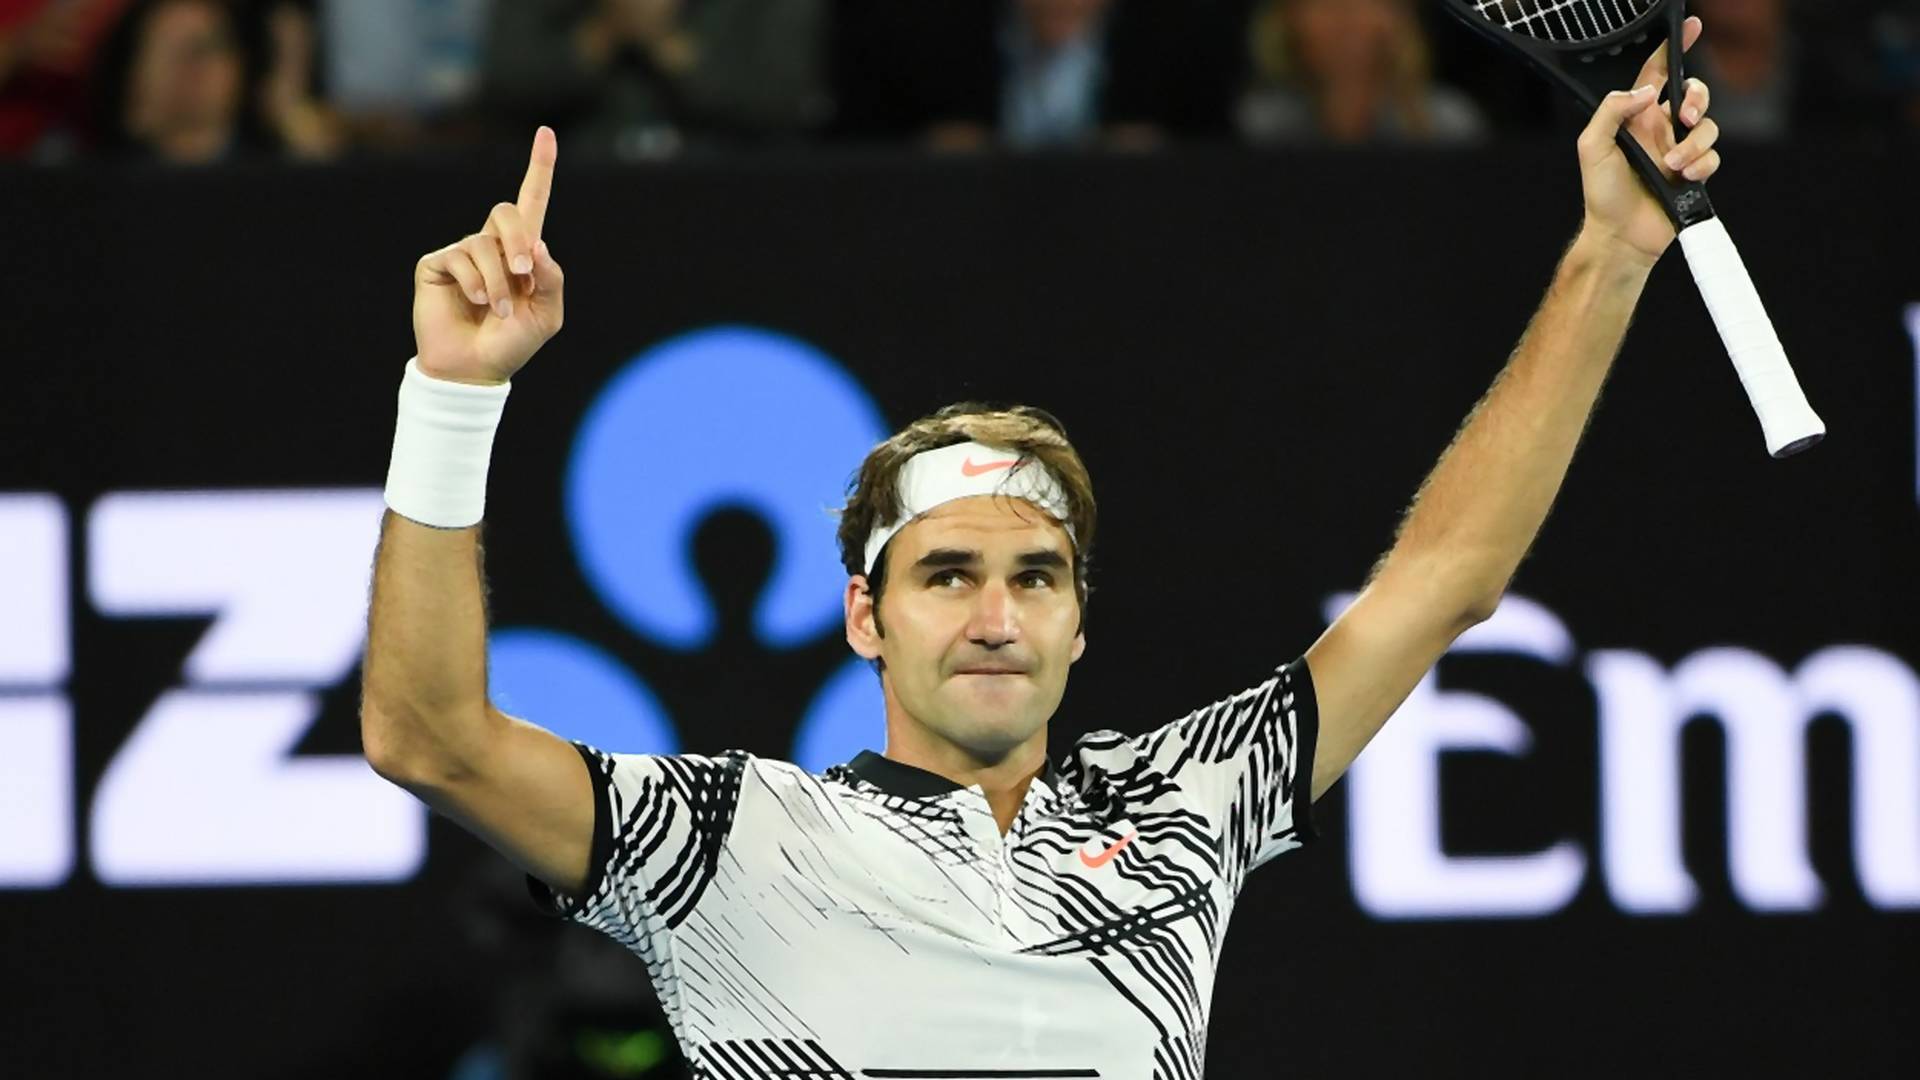 Reakcija Federera nakon pobede - za naklon!